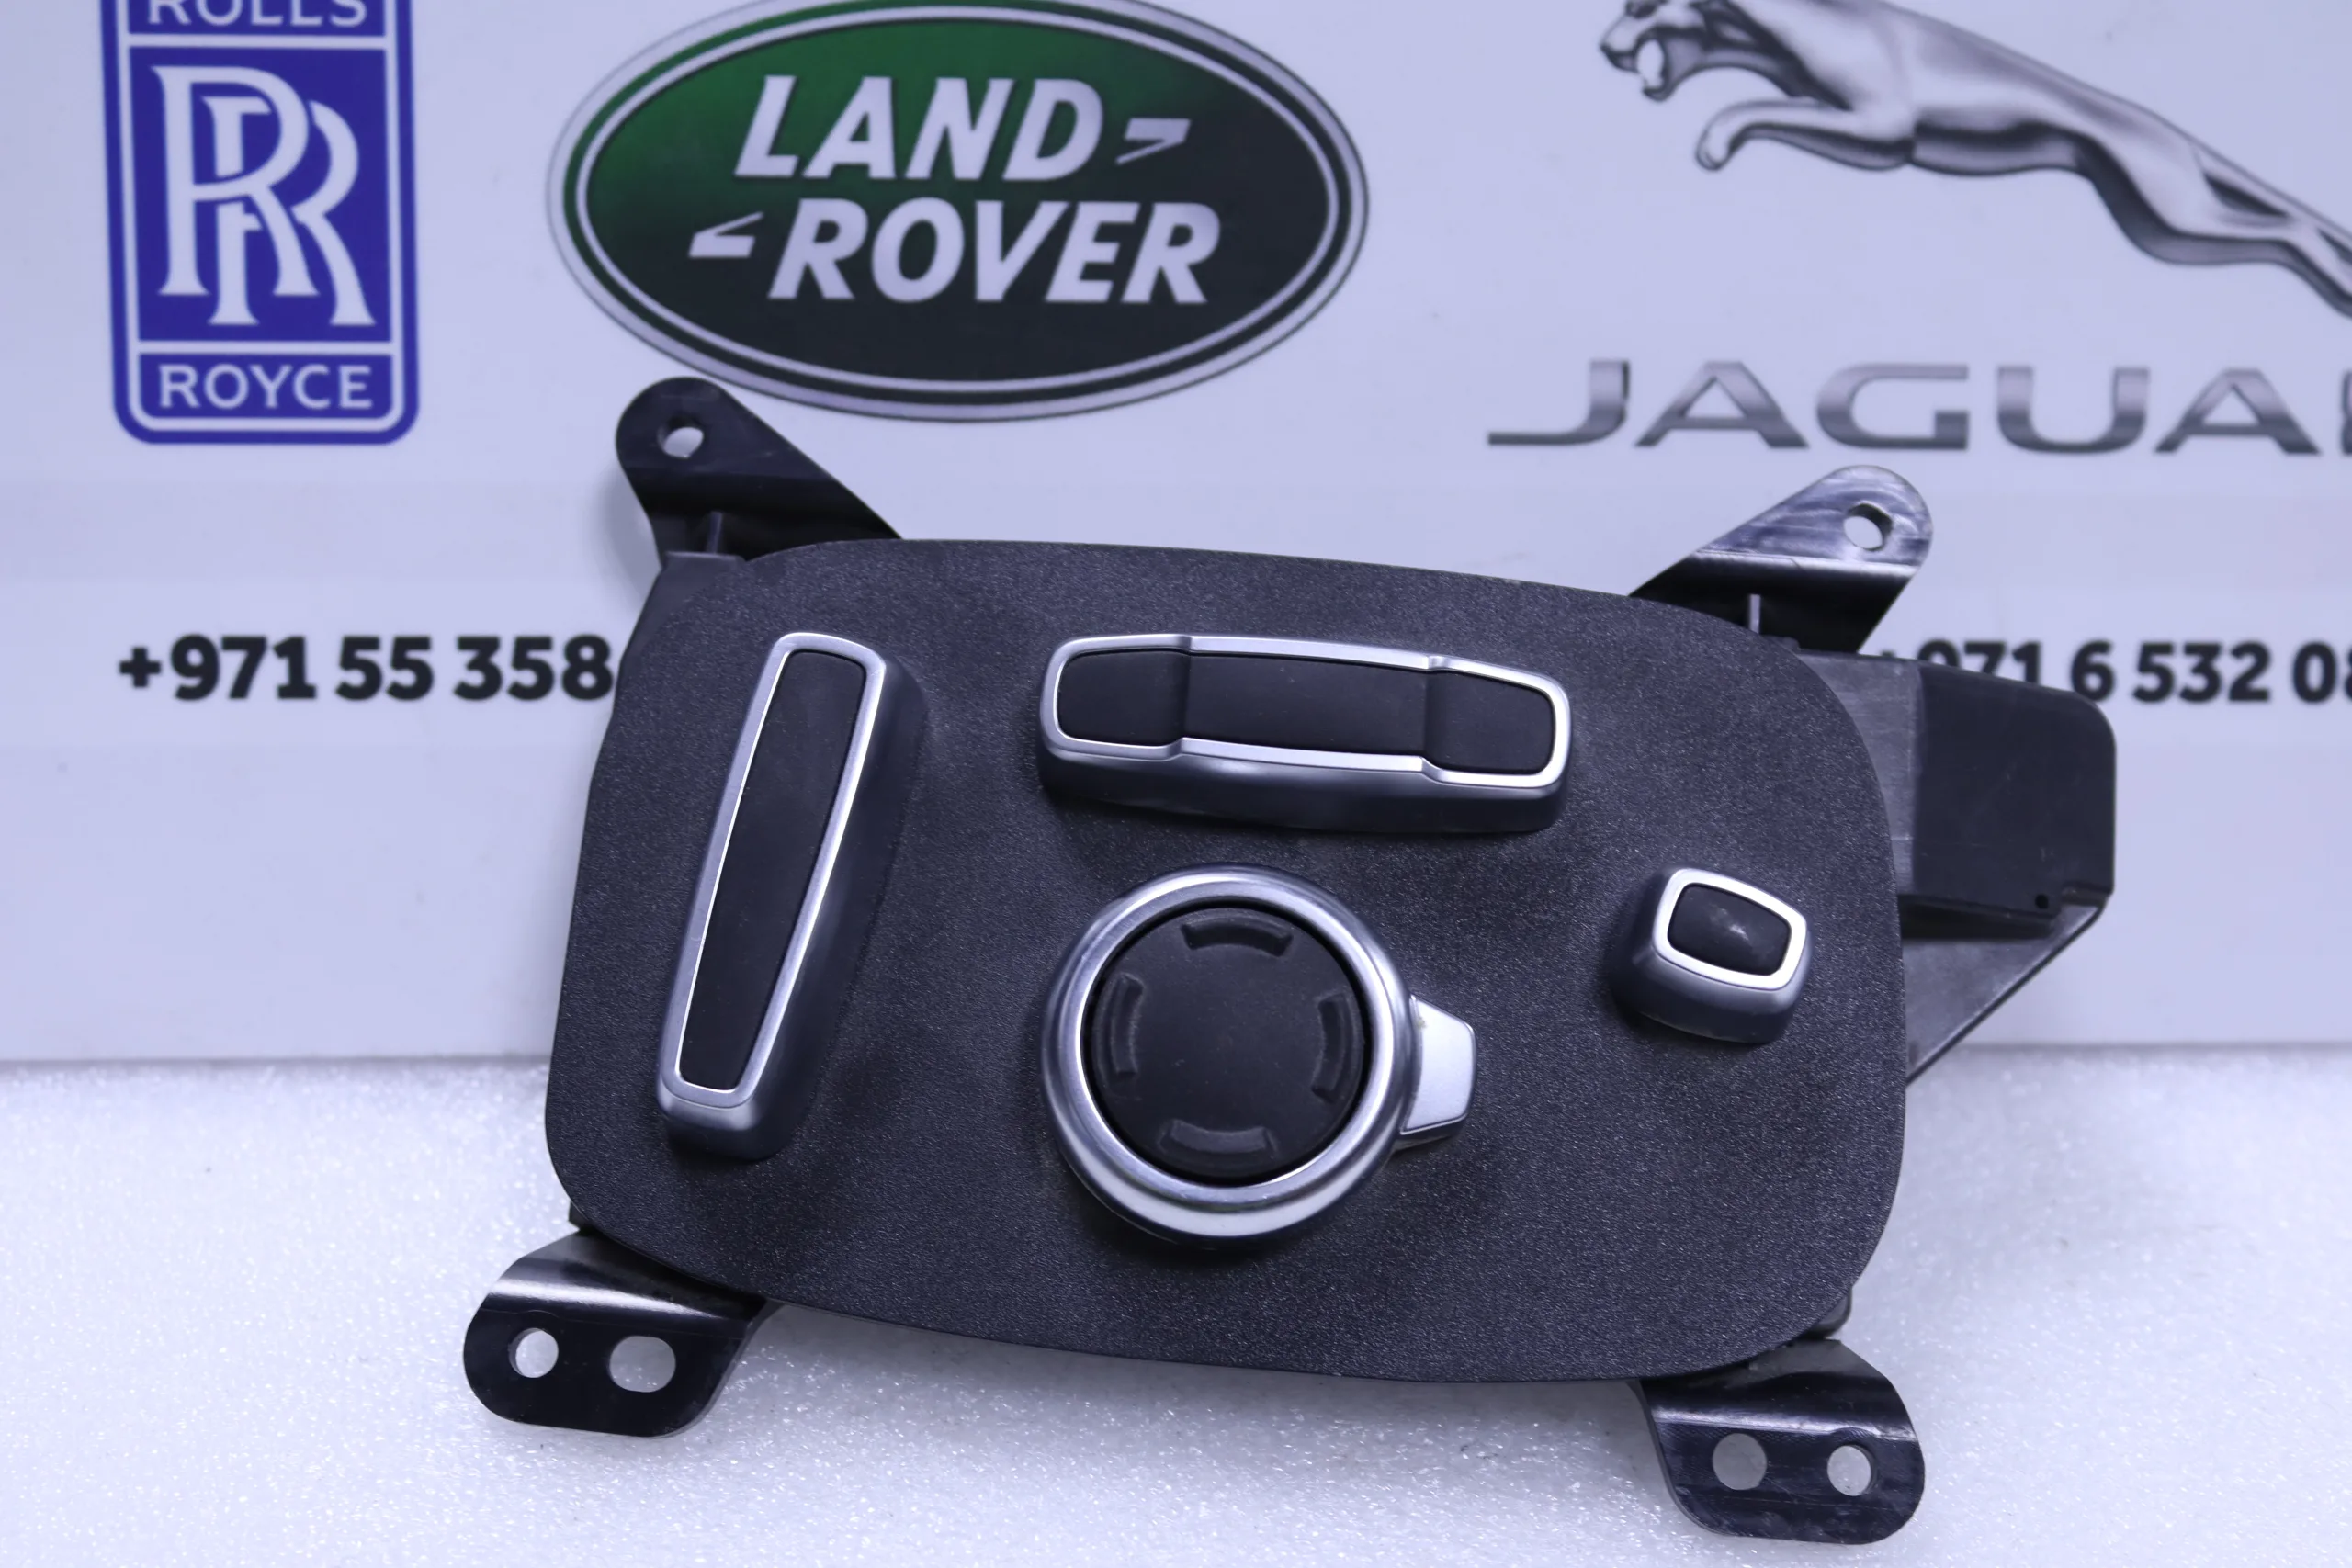 Land Rover Range Rover Sport Seat Memory Switch Gpla14B566Ub